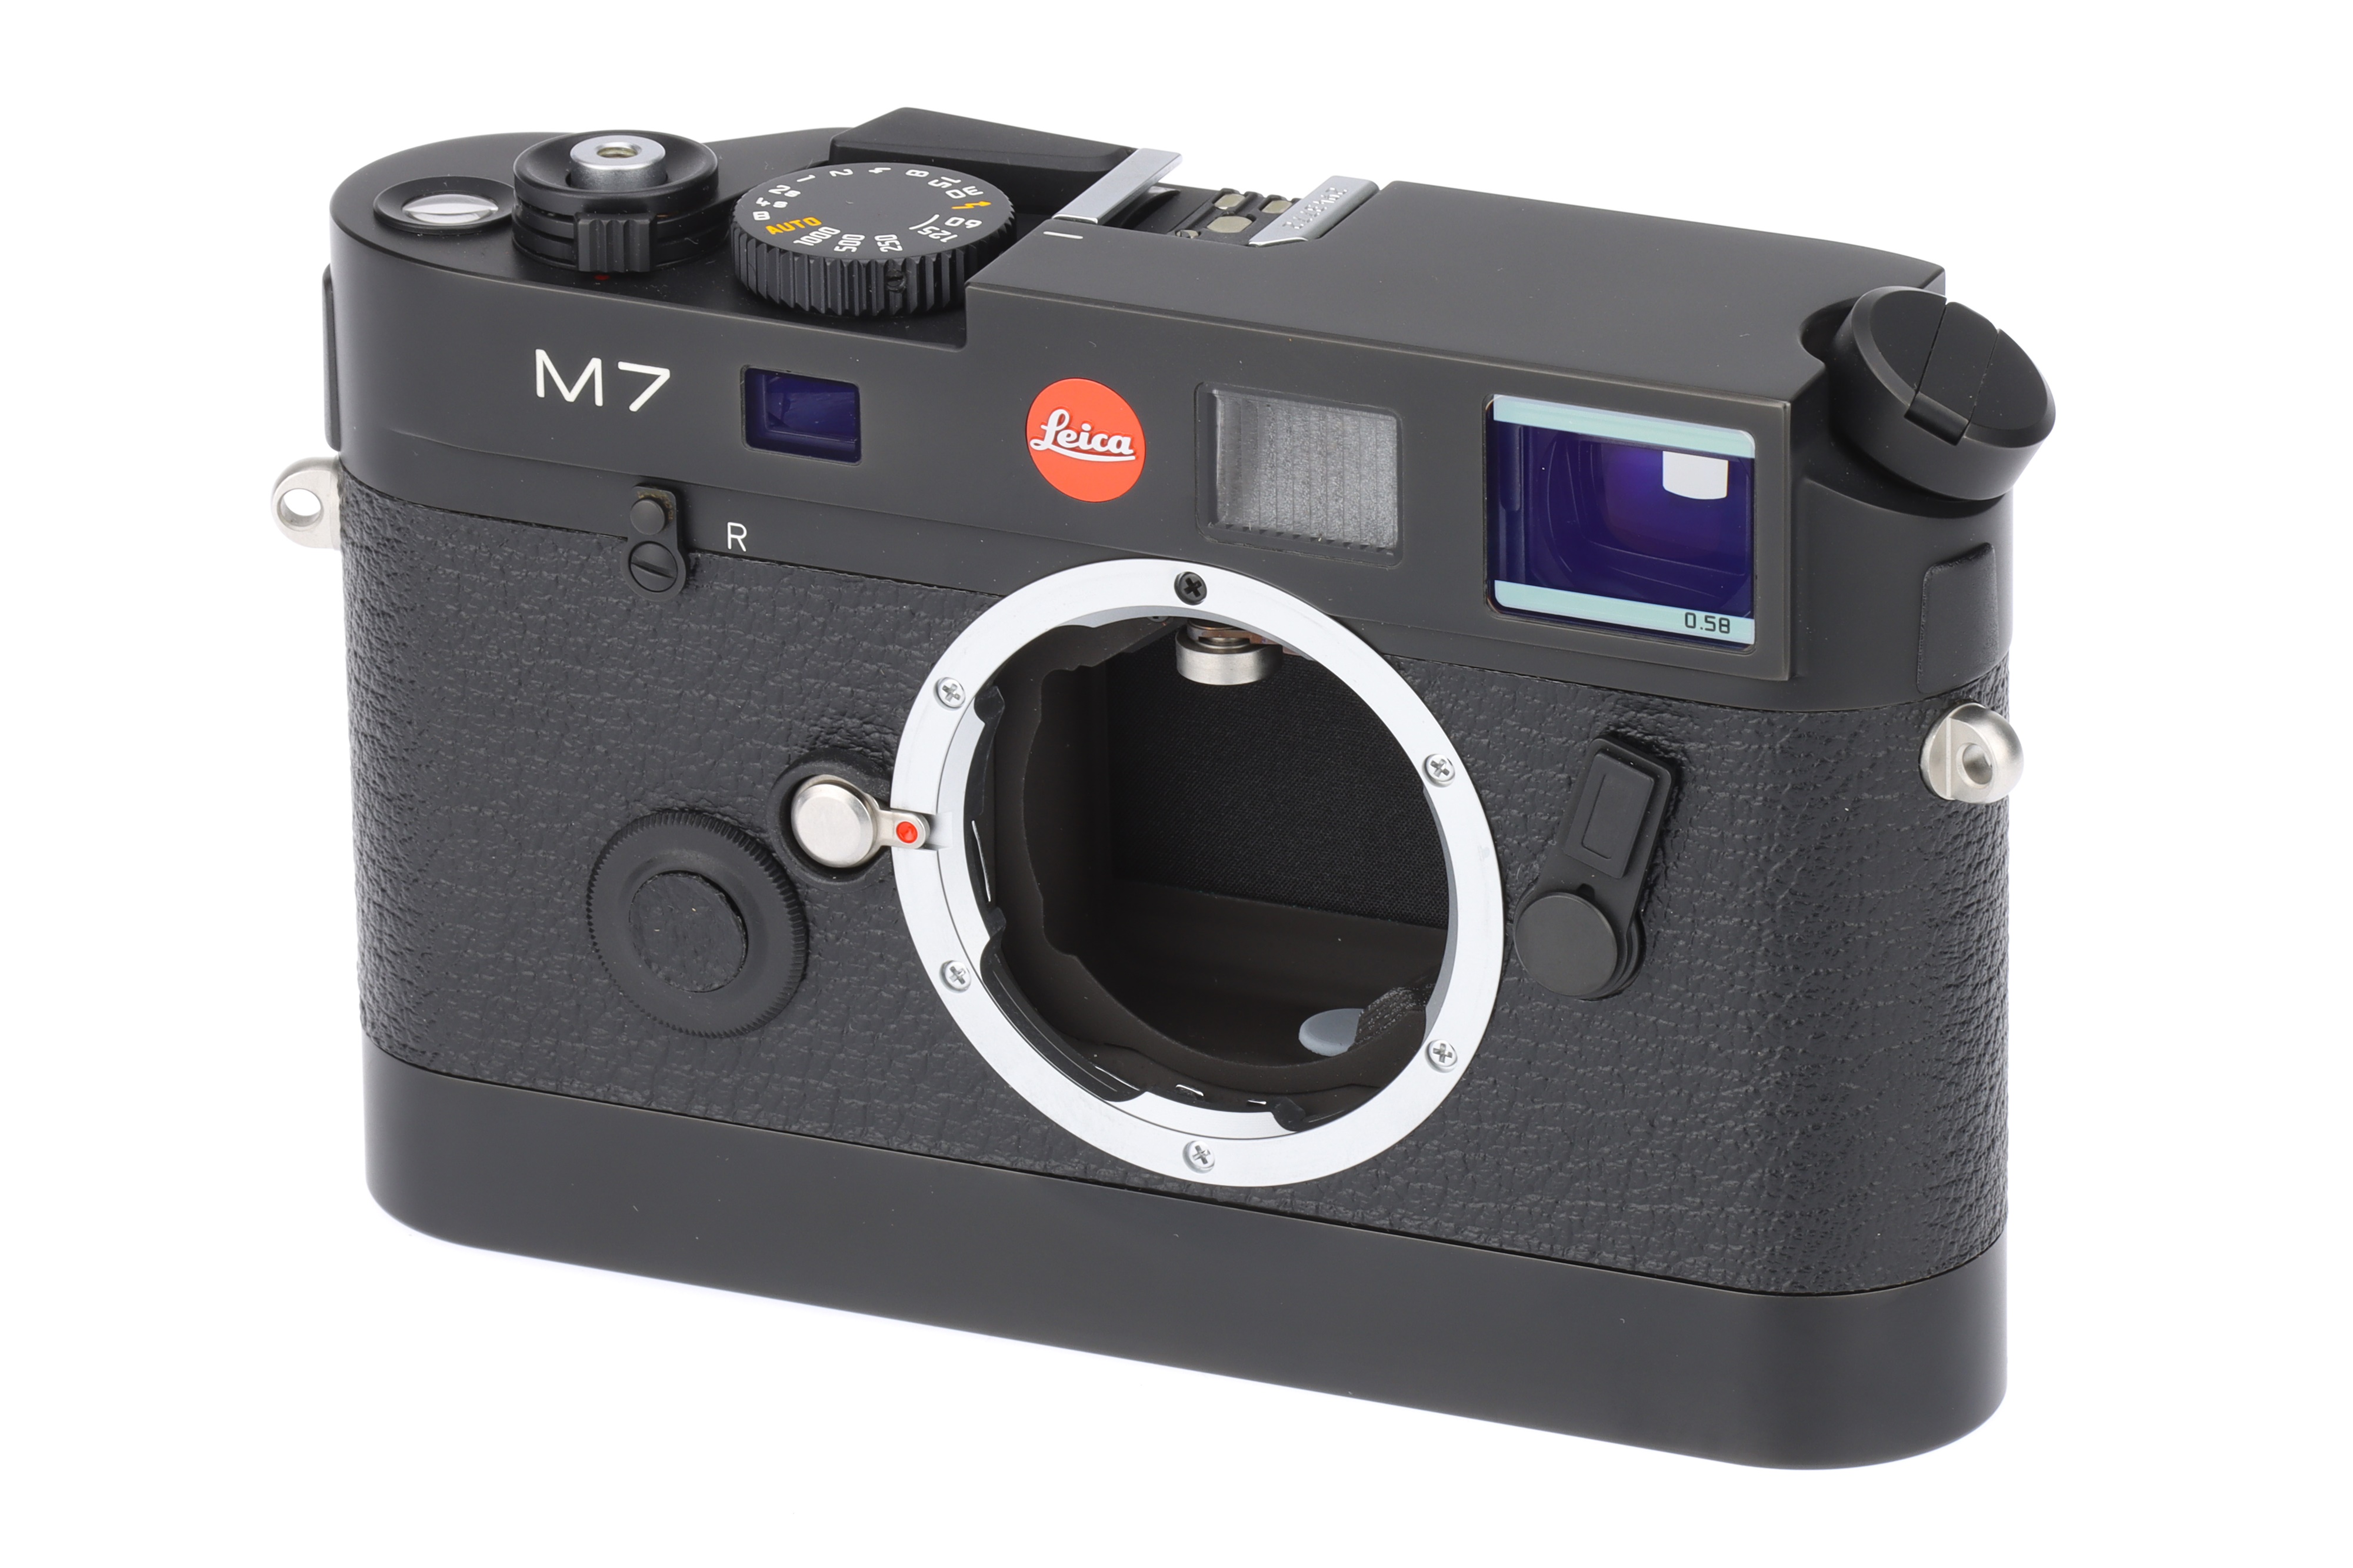 A Leica M7 0.58 Rangefinder Body,